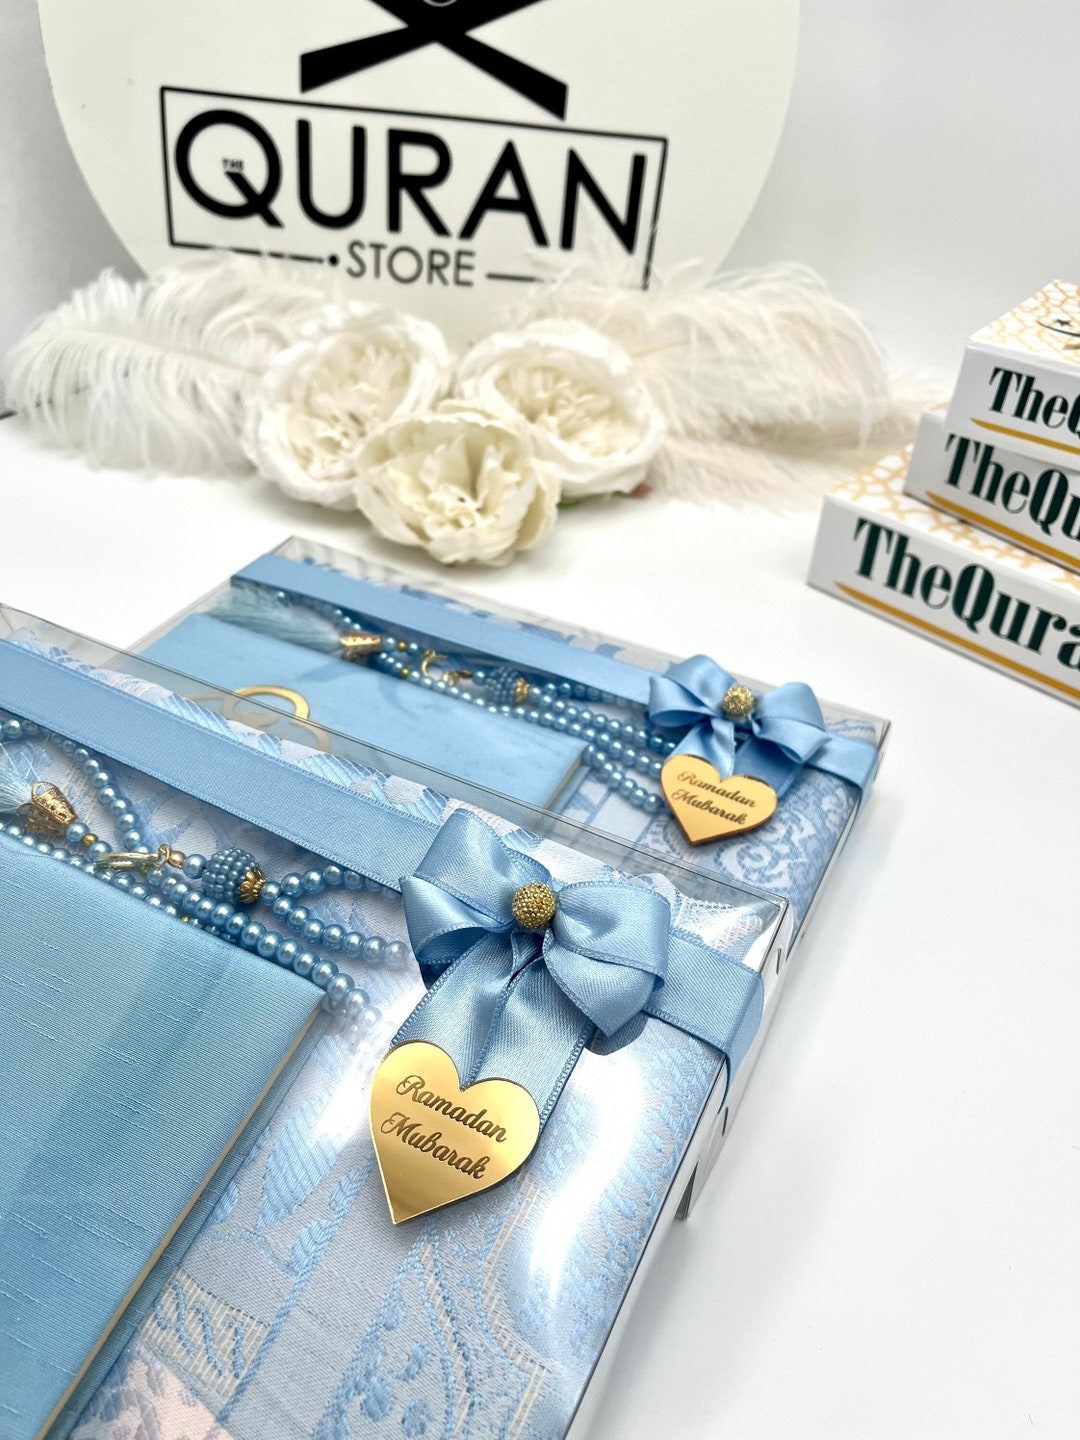 EID AL-FITR 3 Pcs Muslimische Tasbih-Quaste Muslimische Geschenke